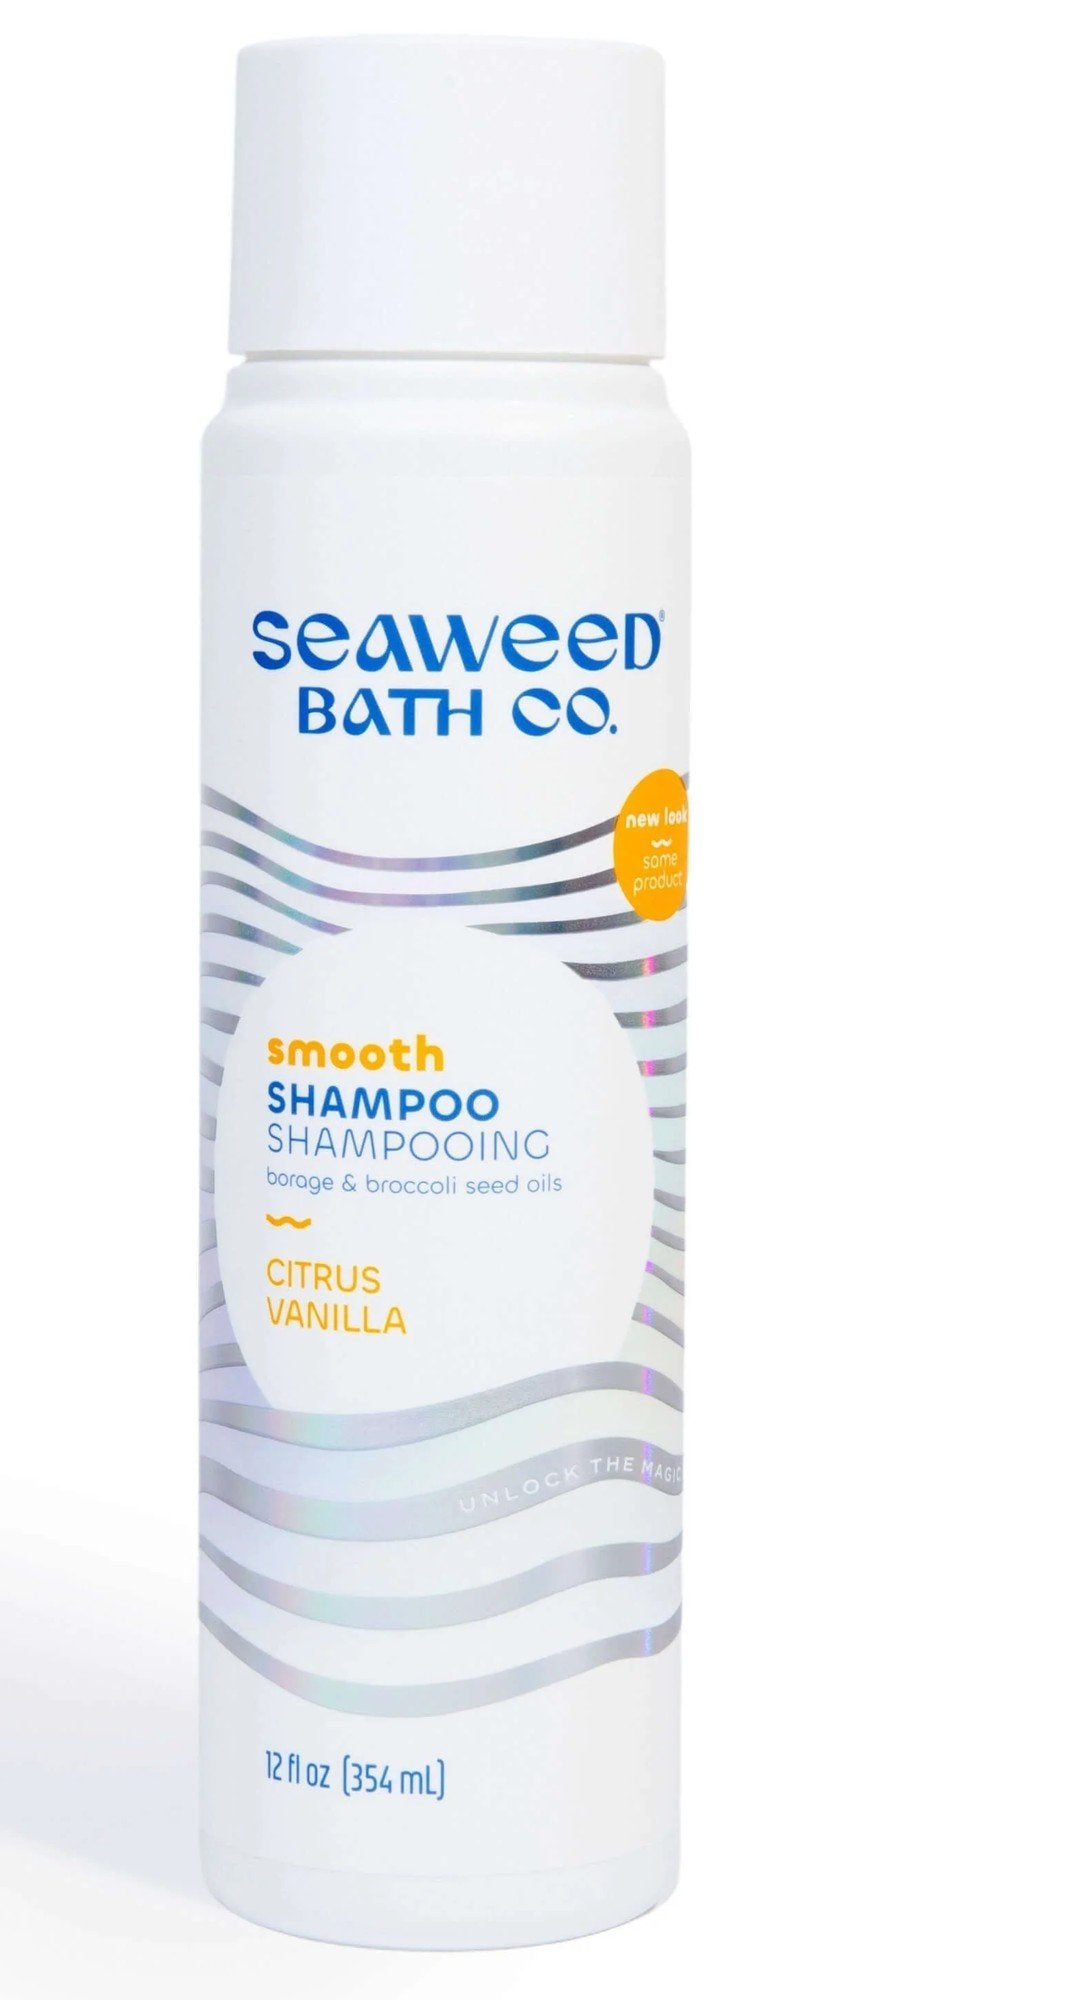 The Seaweed Bath Co. Smooth Shampoo Citrus Vanilla 12.0 oz Liquid